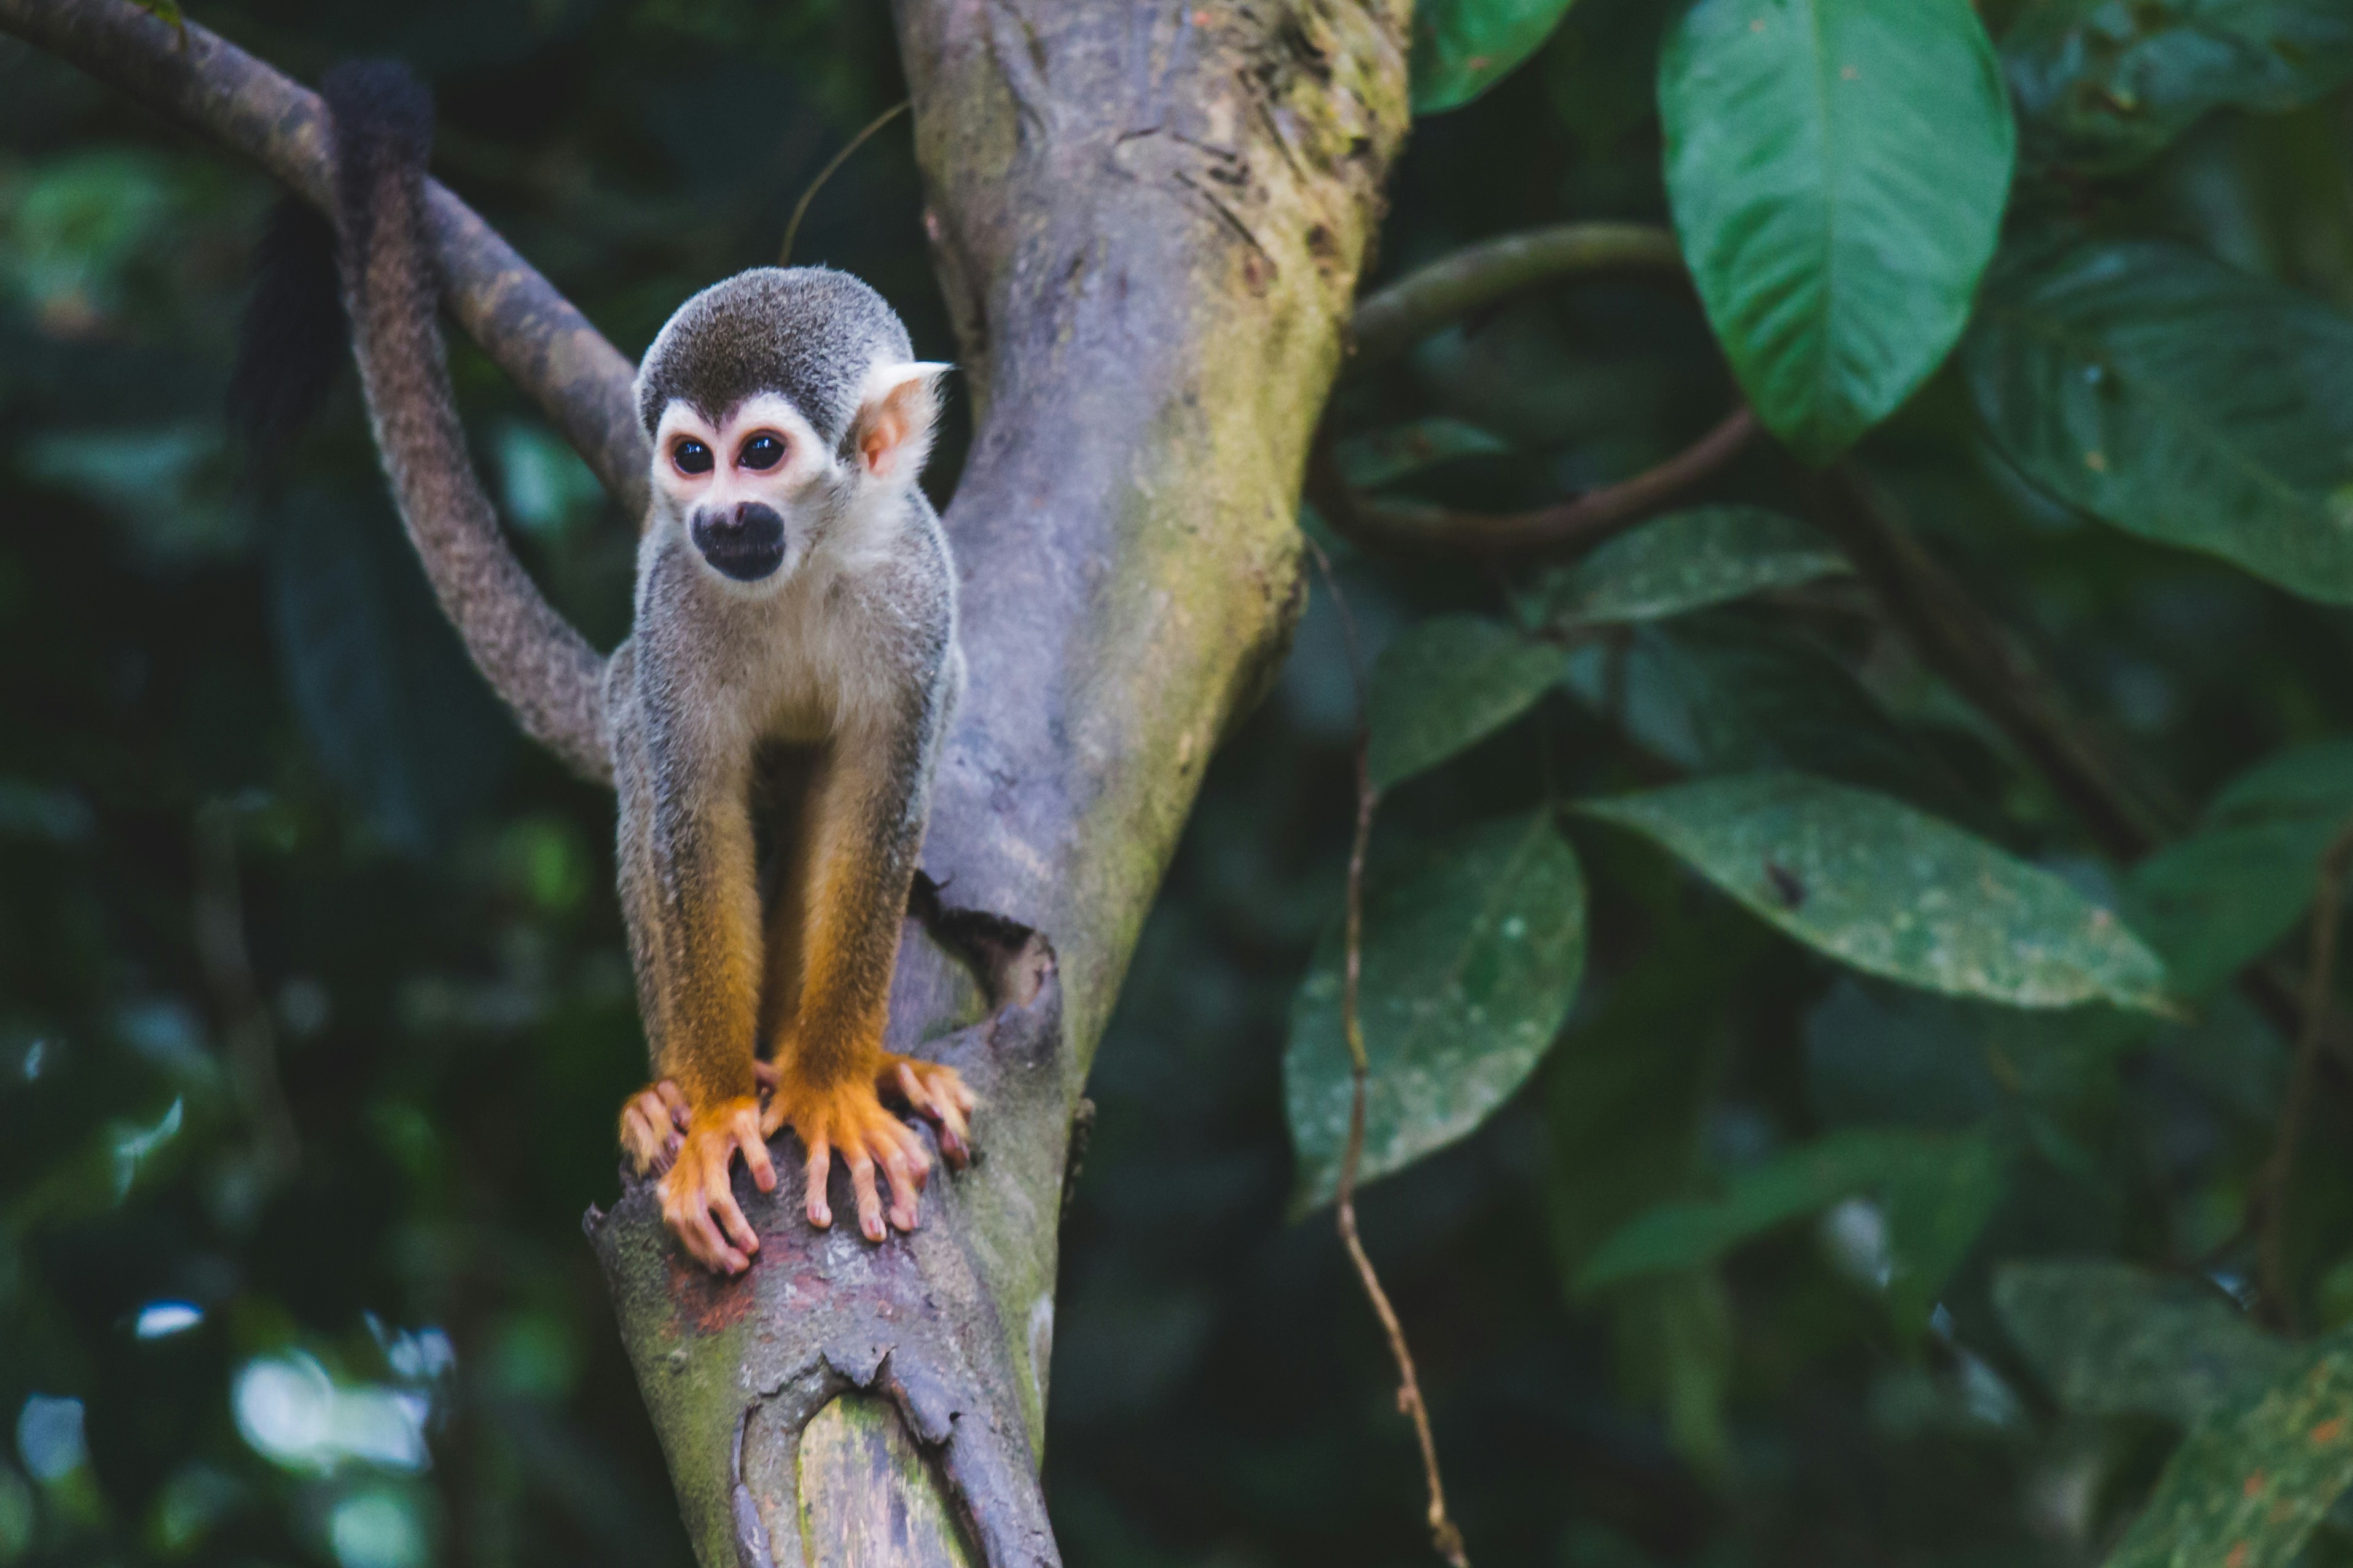 A common squirrel monkey (Saimiri sciureus)